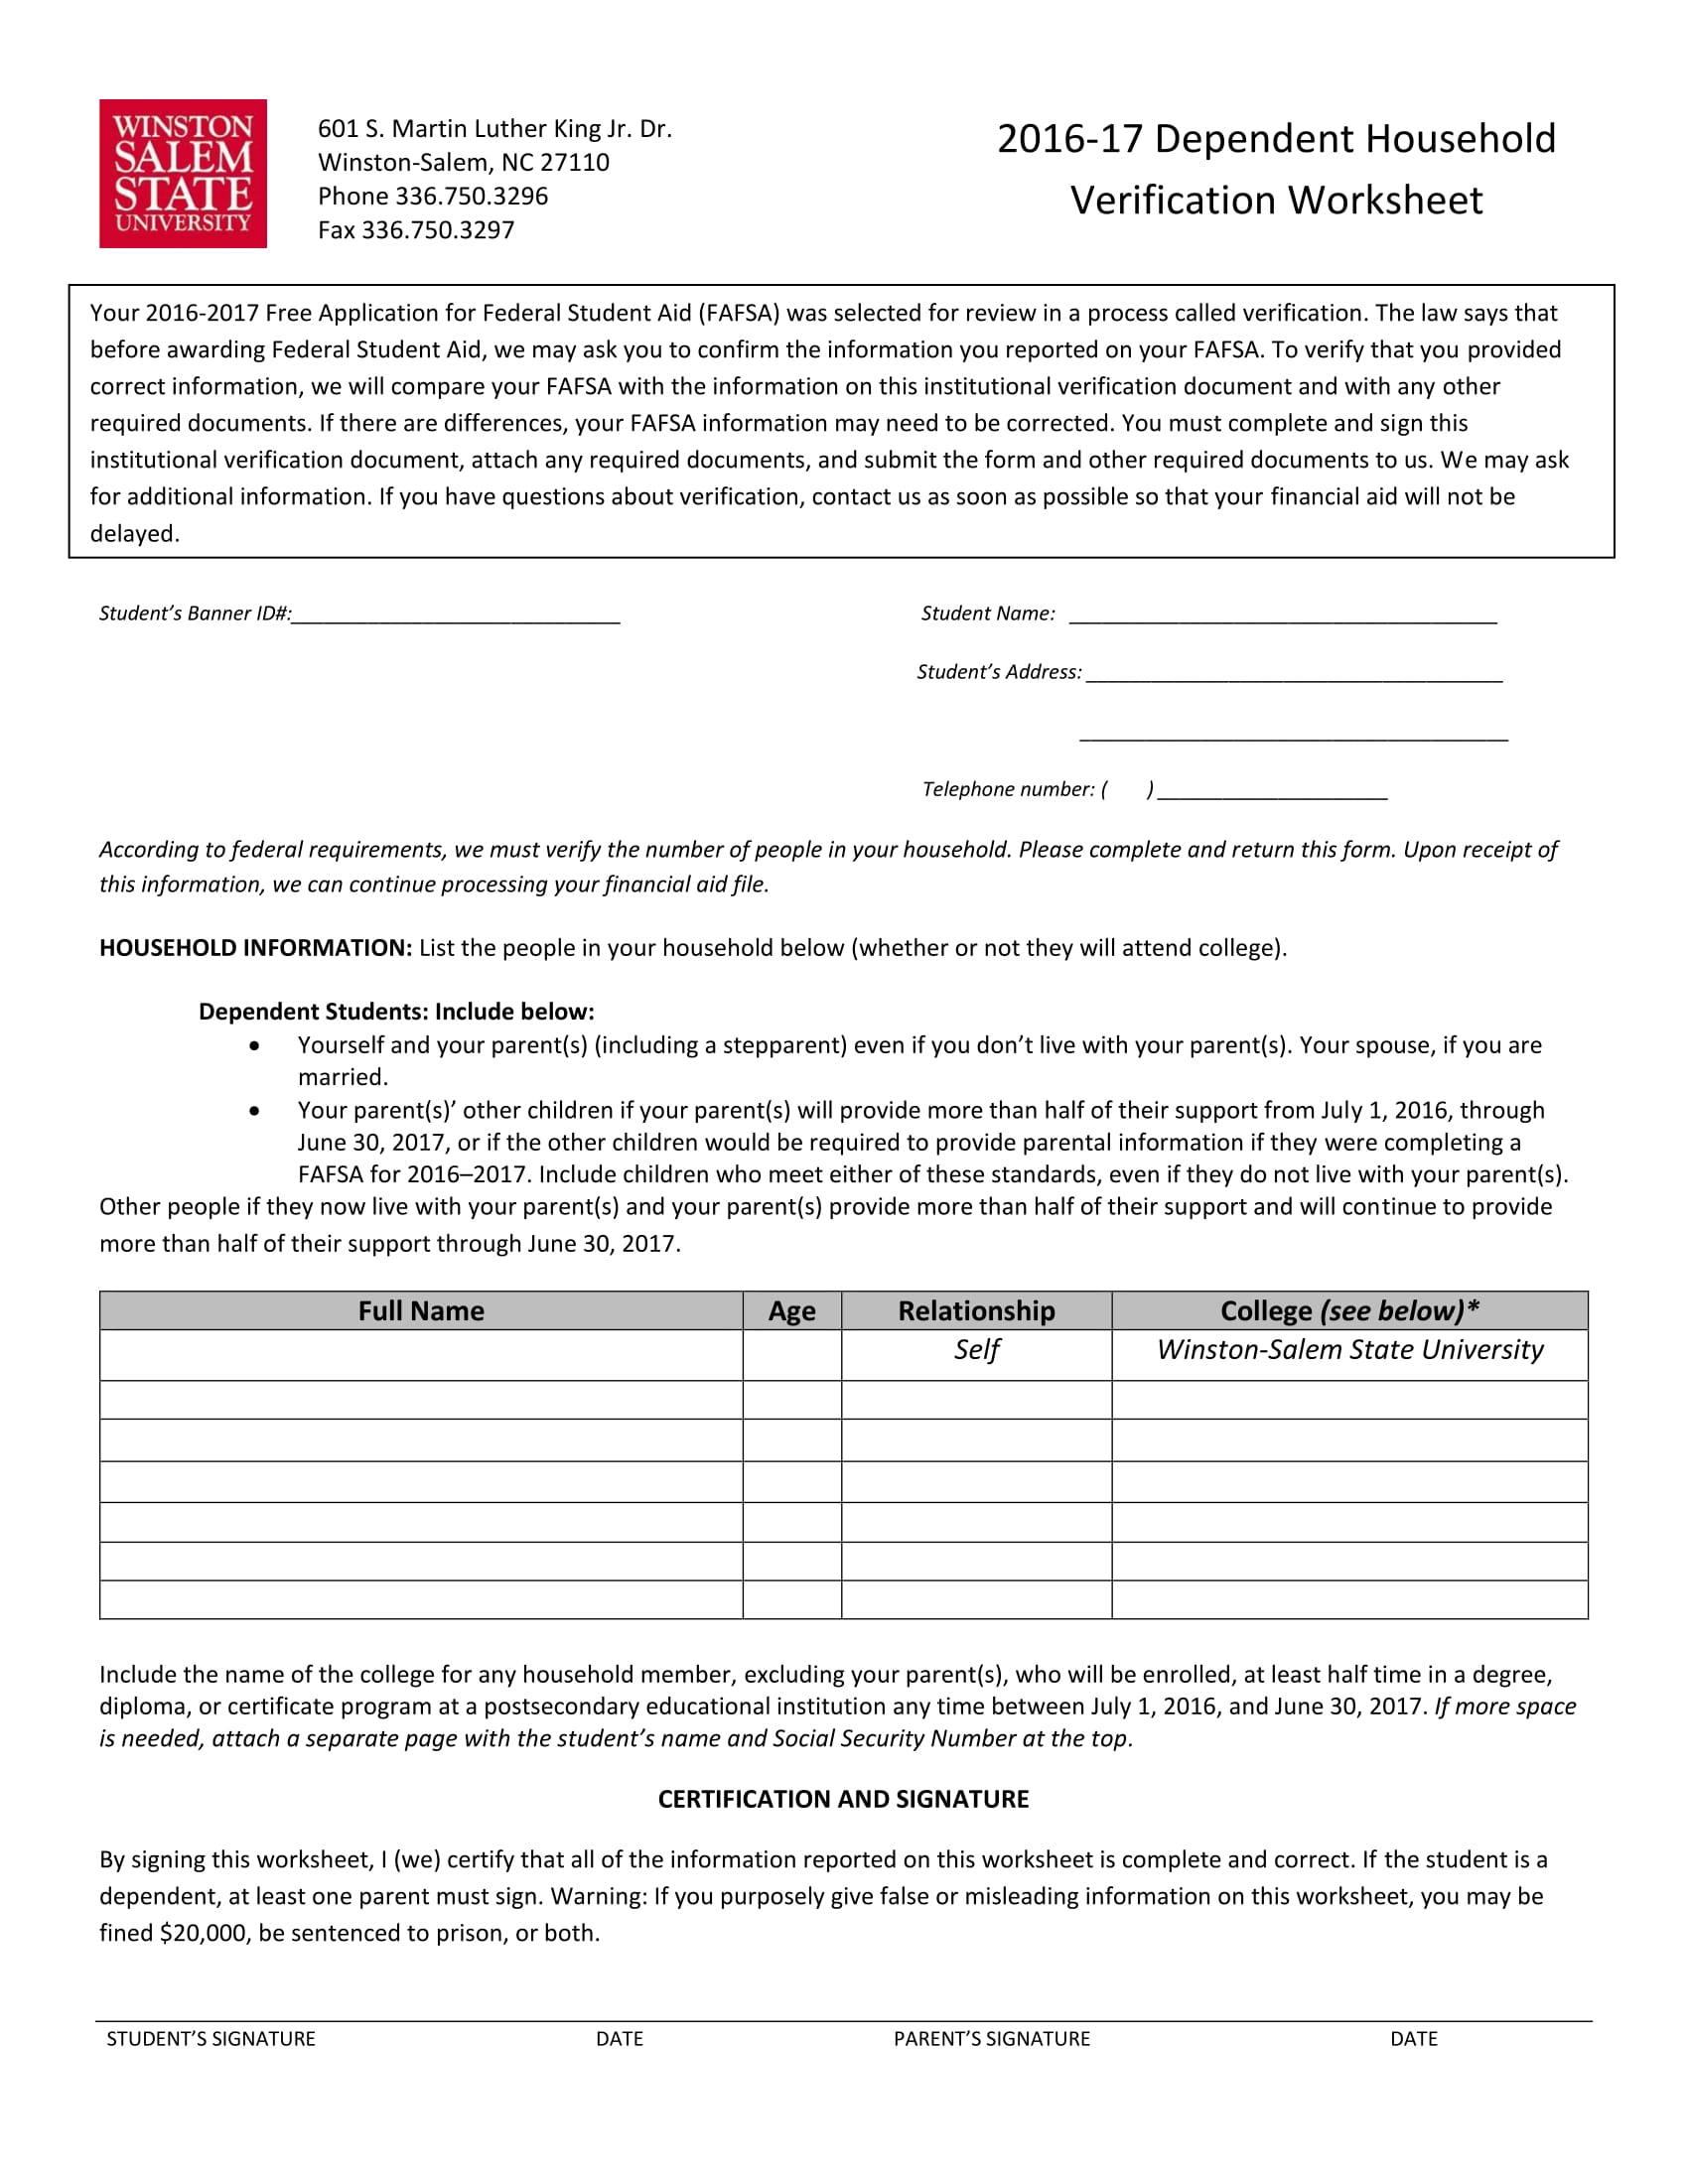 dependent household verification form 1